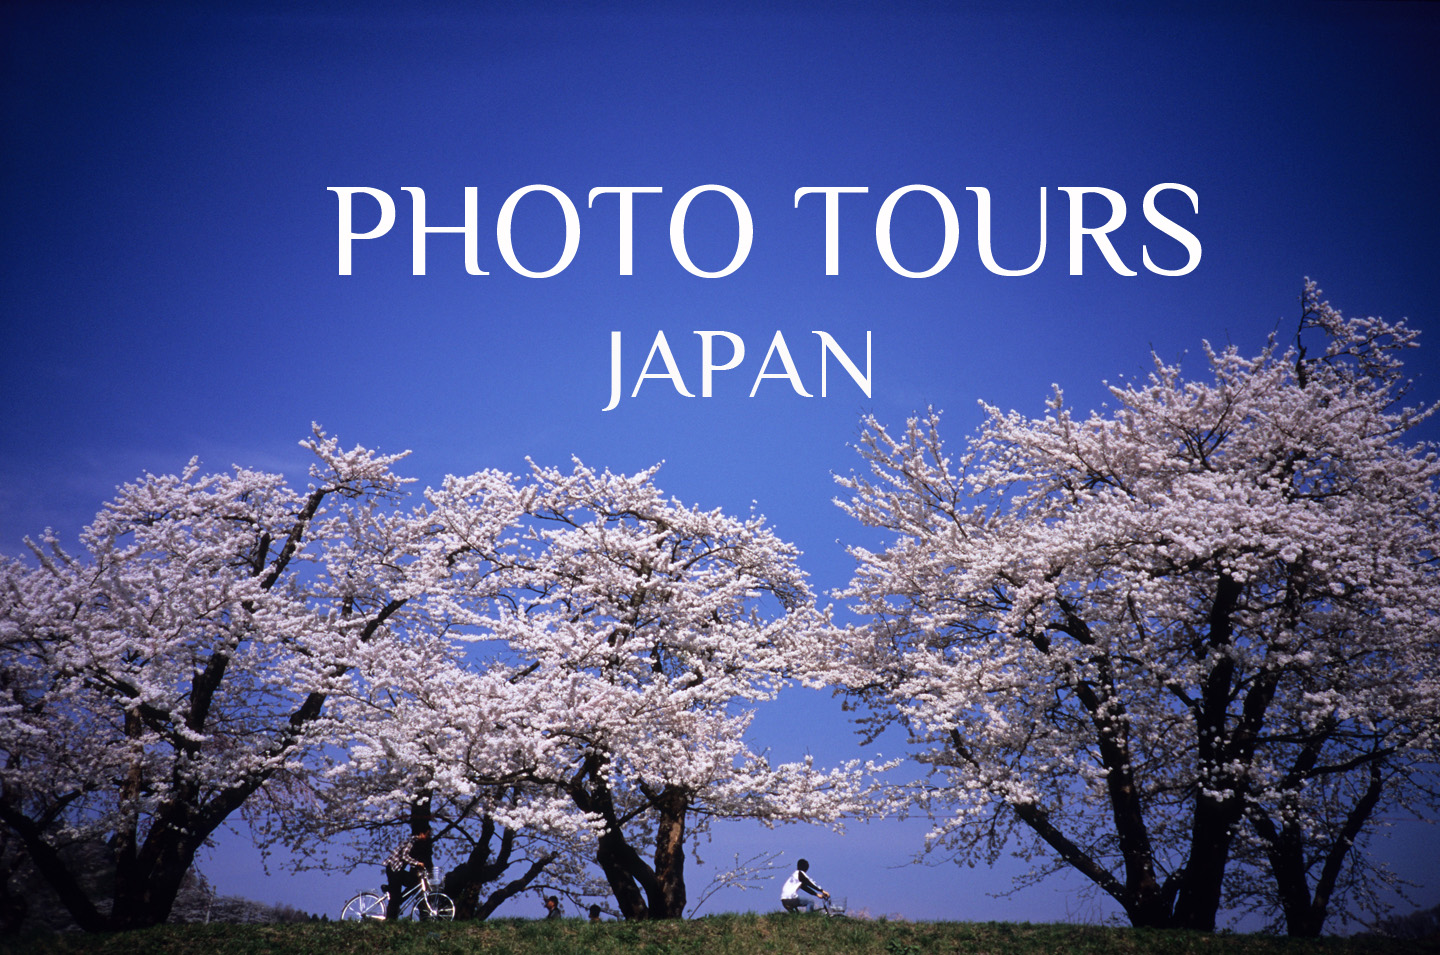 Cherry blossoms in Kakunodate, Tohoku